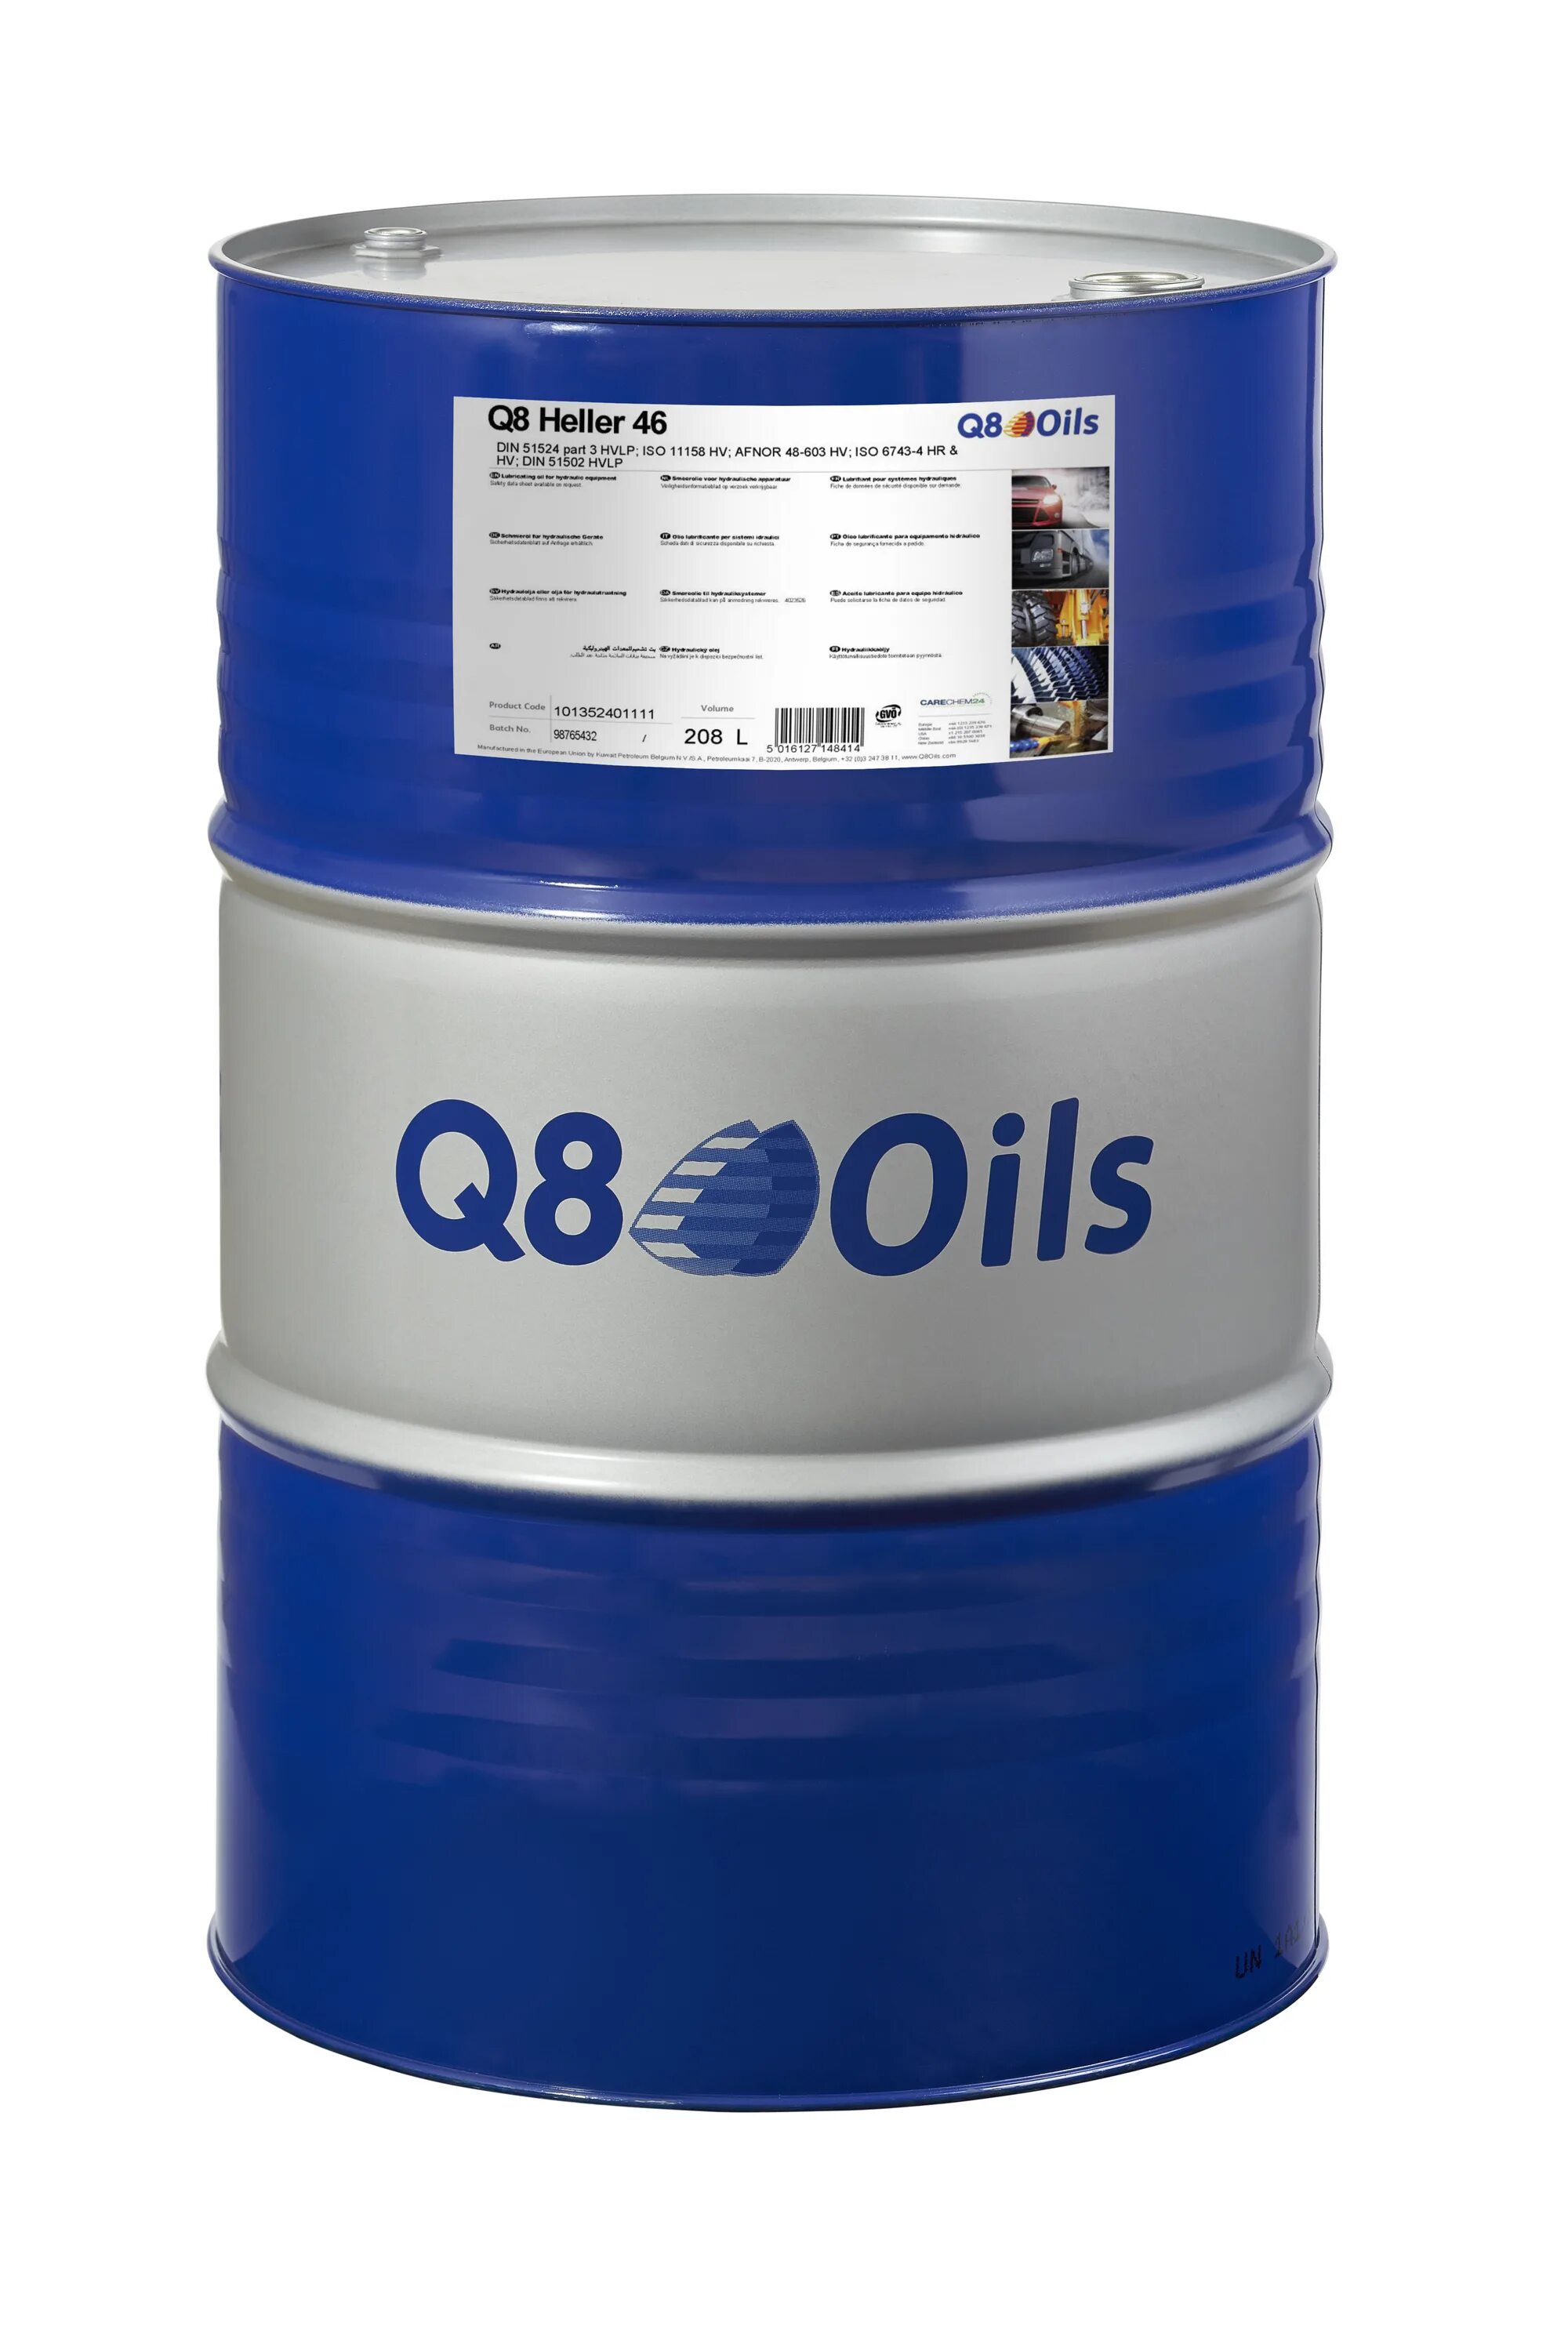 Q8 Oils 200l. Q8 EVO 208l CVT масло. Масло q8 Haydn 46. Смазка литиевая q8oils. Гидравлическое масло 8